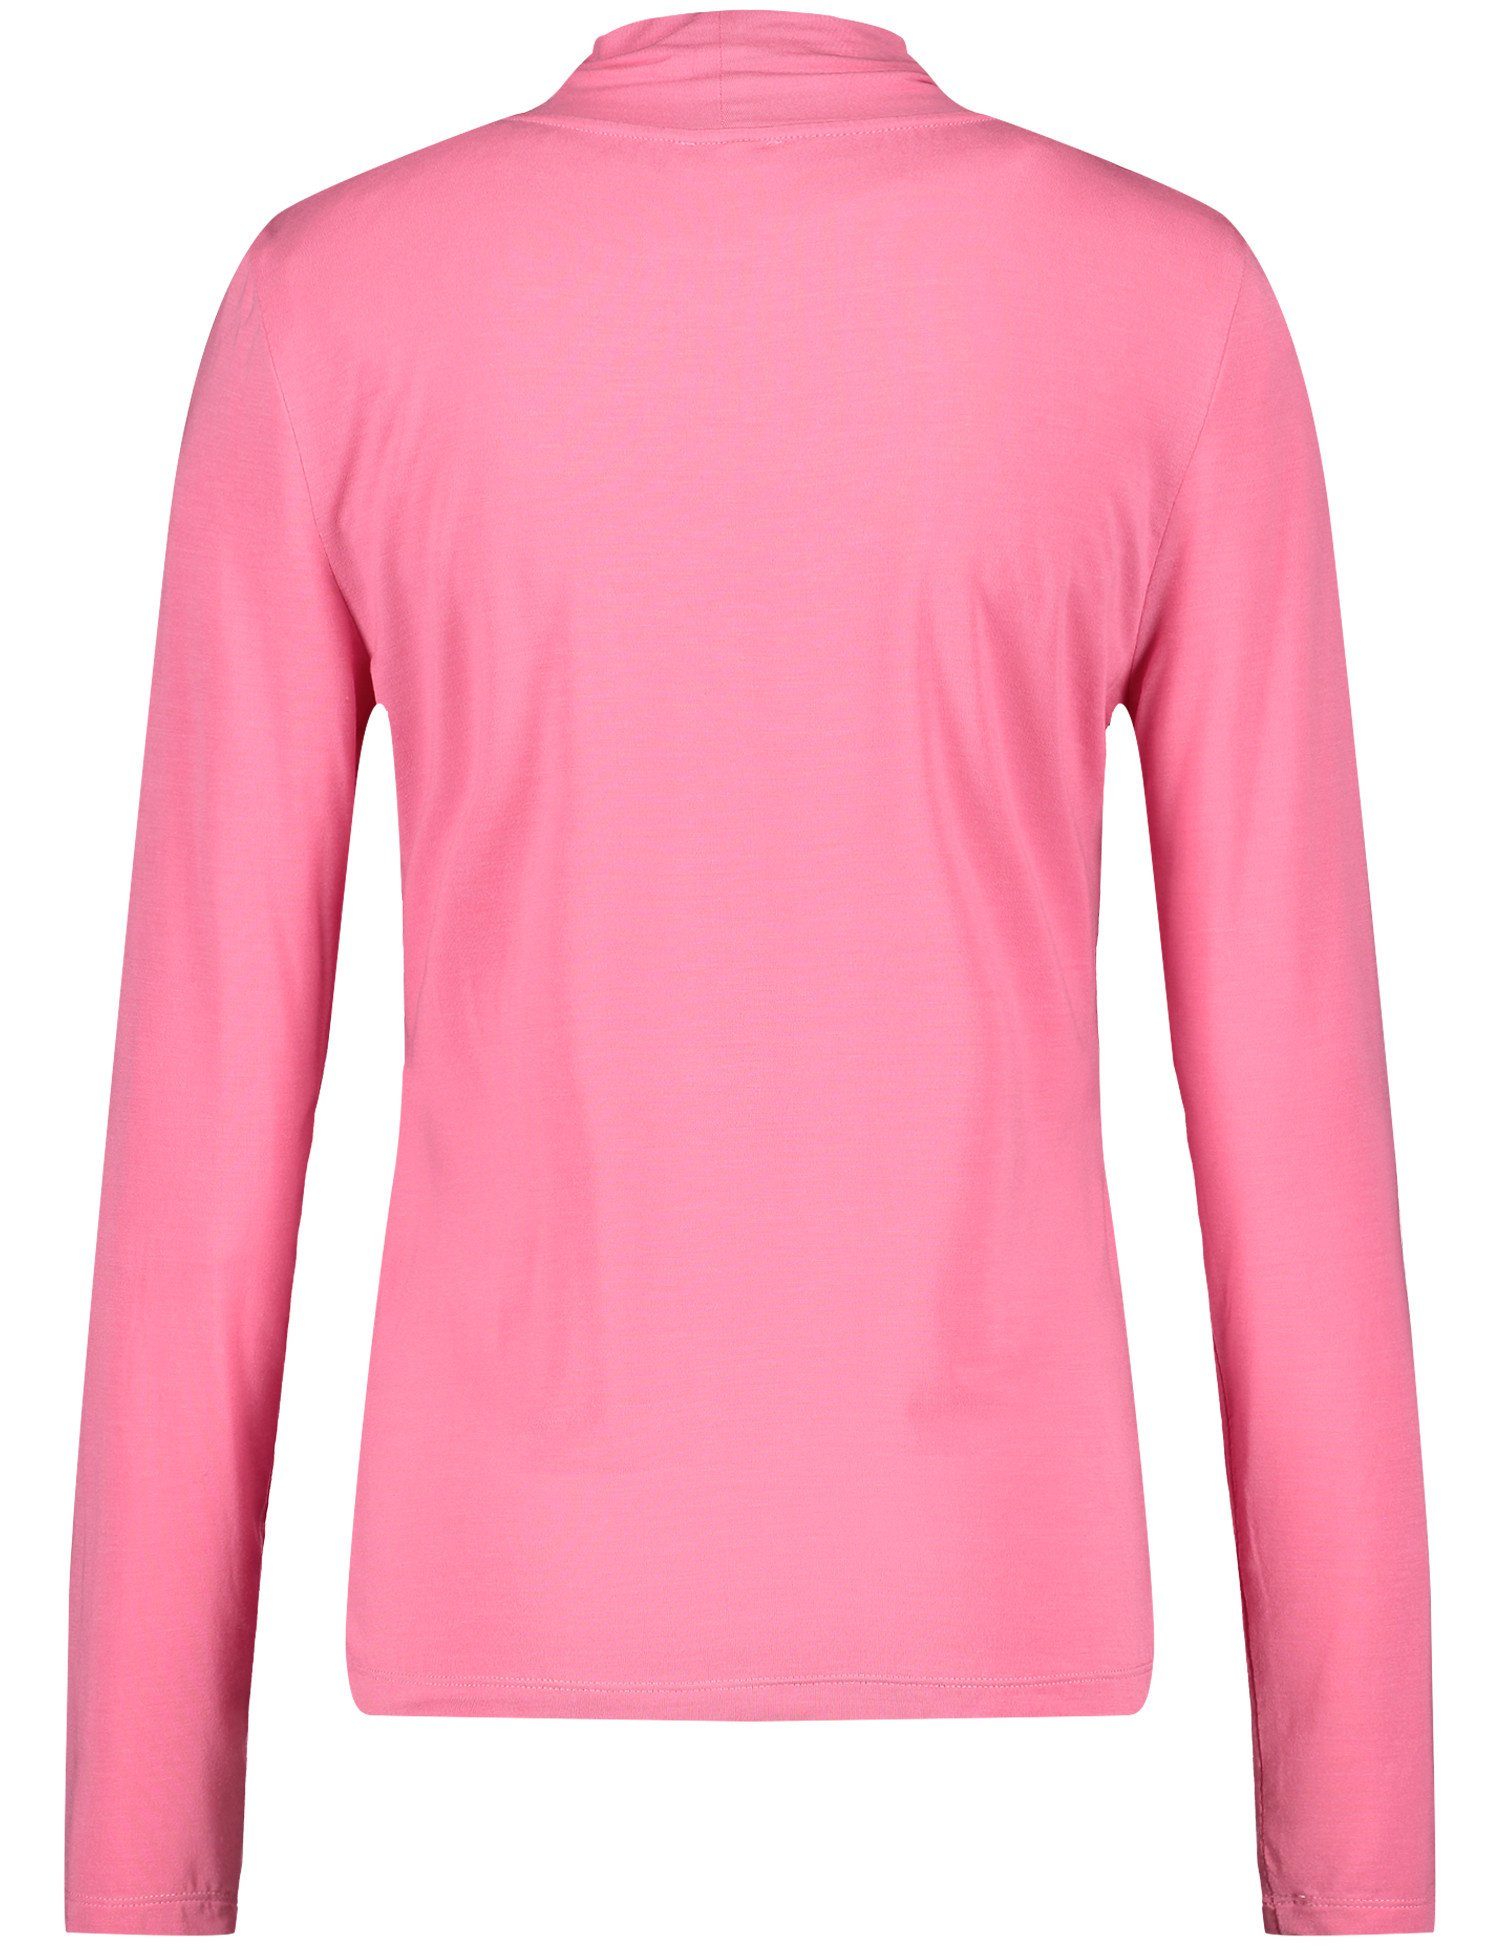 GERRY WEBER Longsleeve Langarmshirt Mit Faltenturtle rose pink